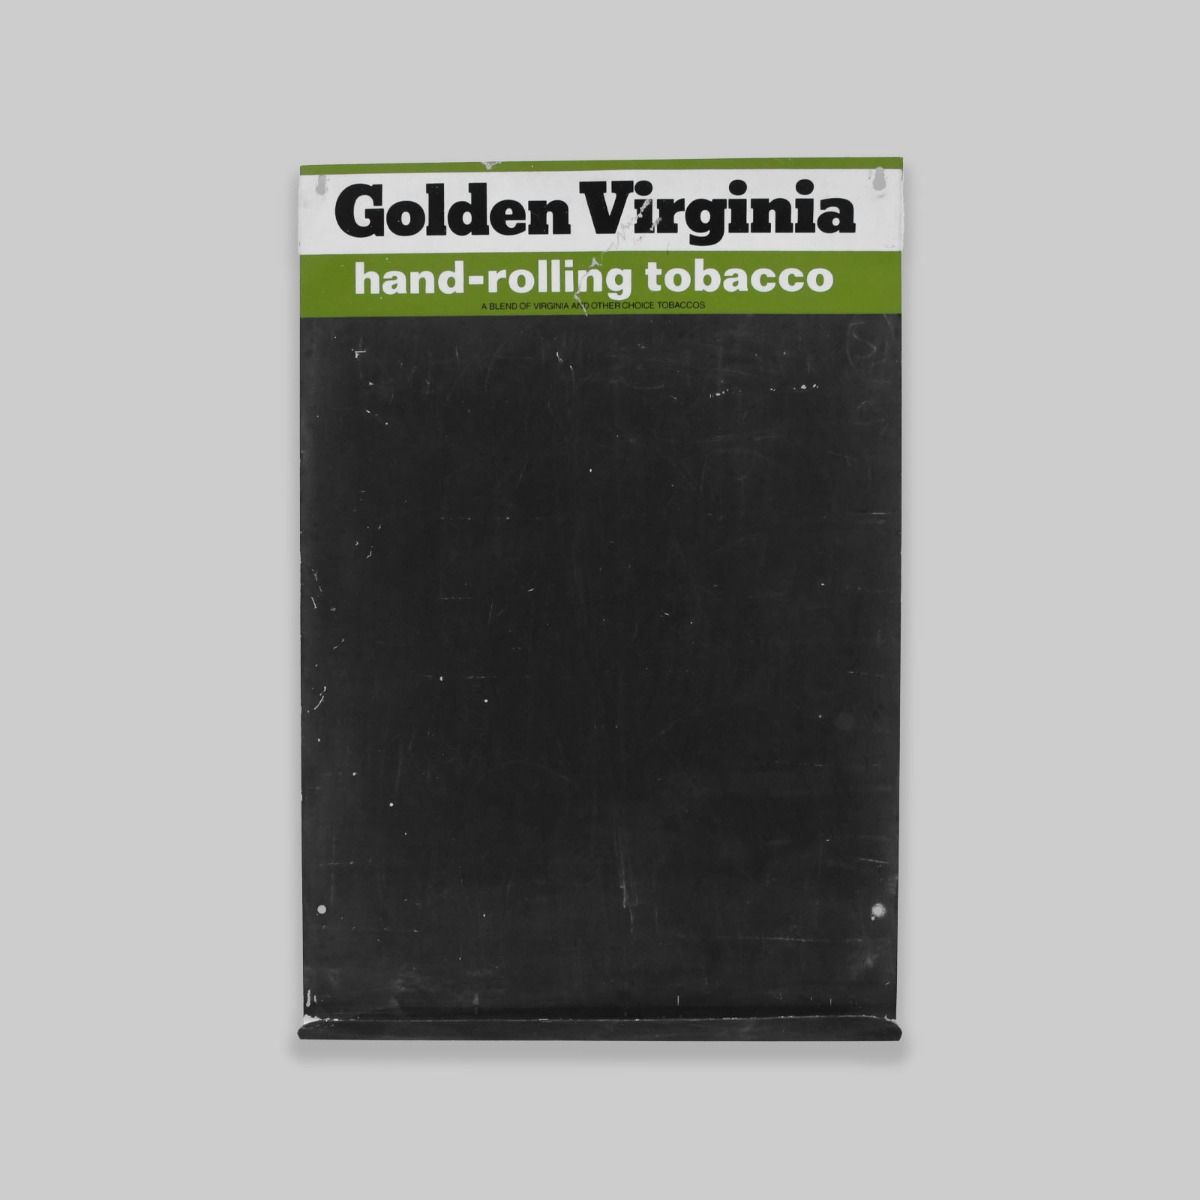 Golden Virginia 1970s Aluminium Chalkboard